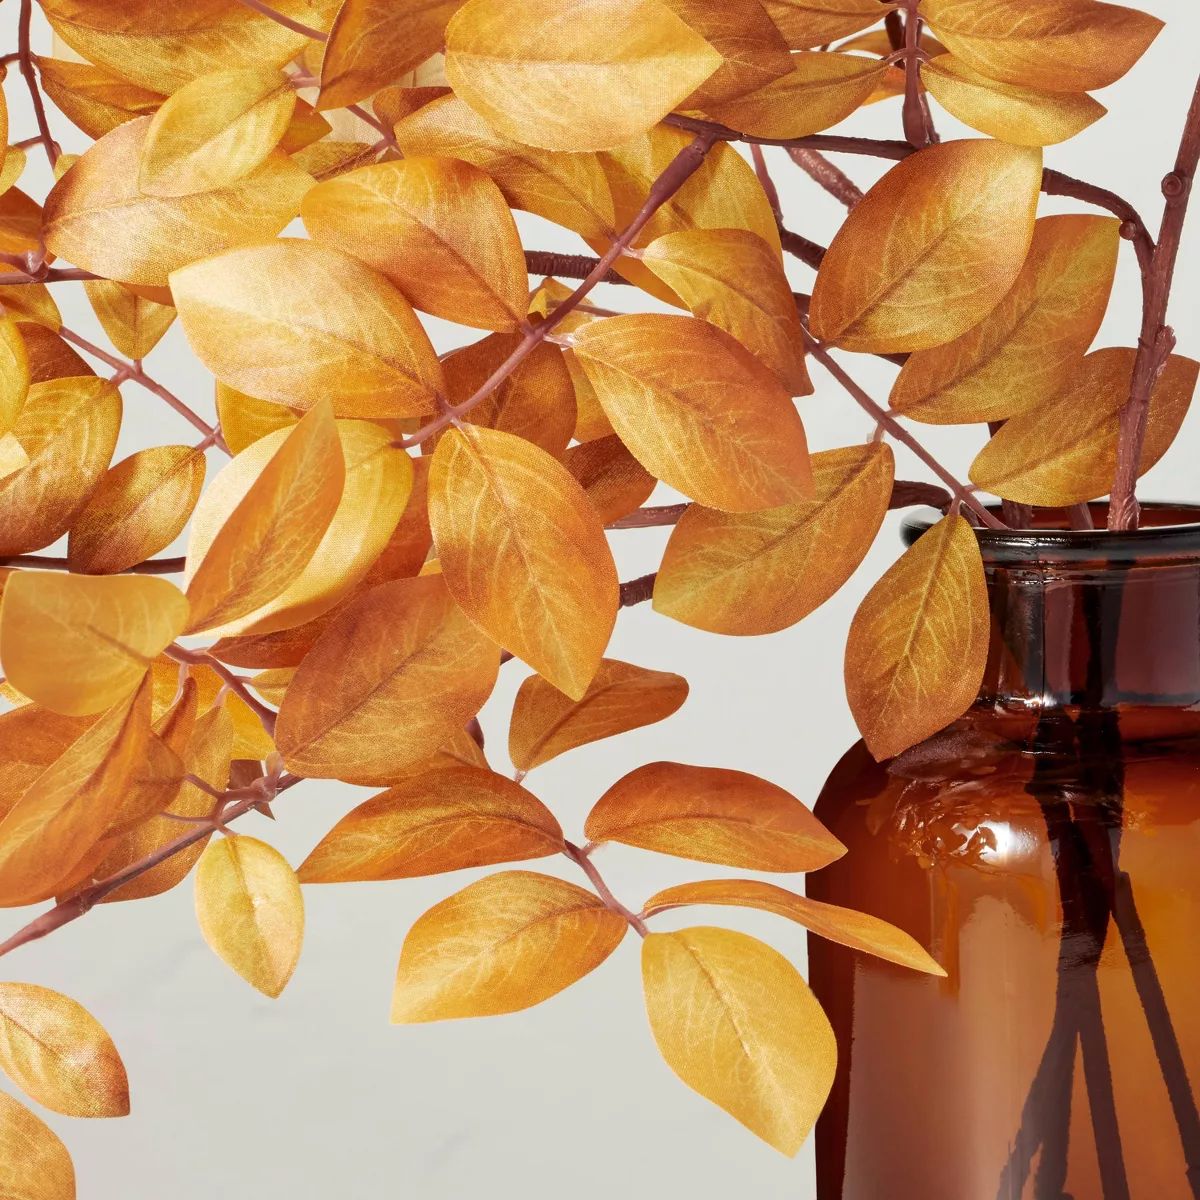 Faux Golden Ash Leaf Arrangement - Hearth & Hand™ with Magnolia | Target